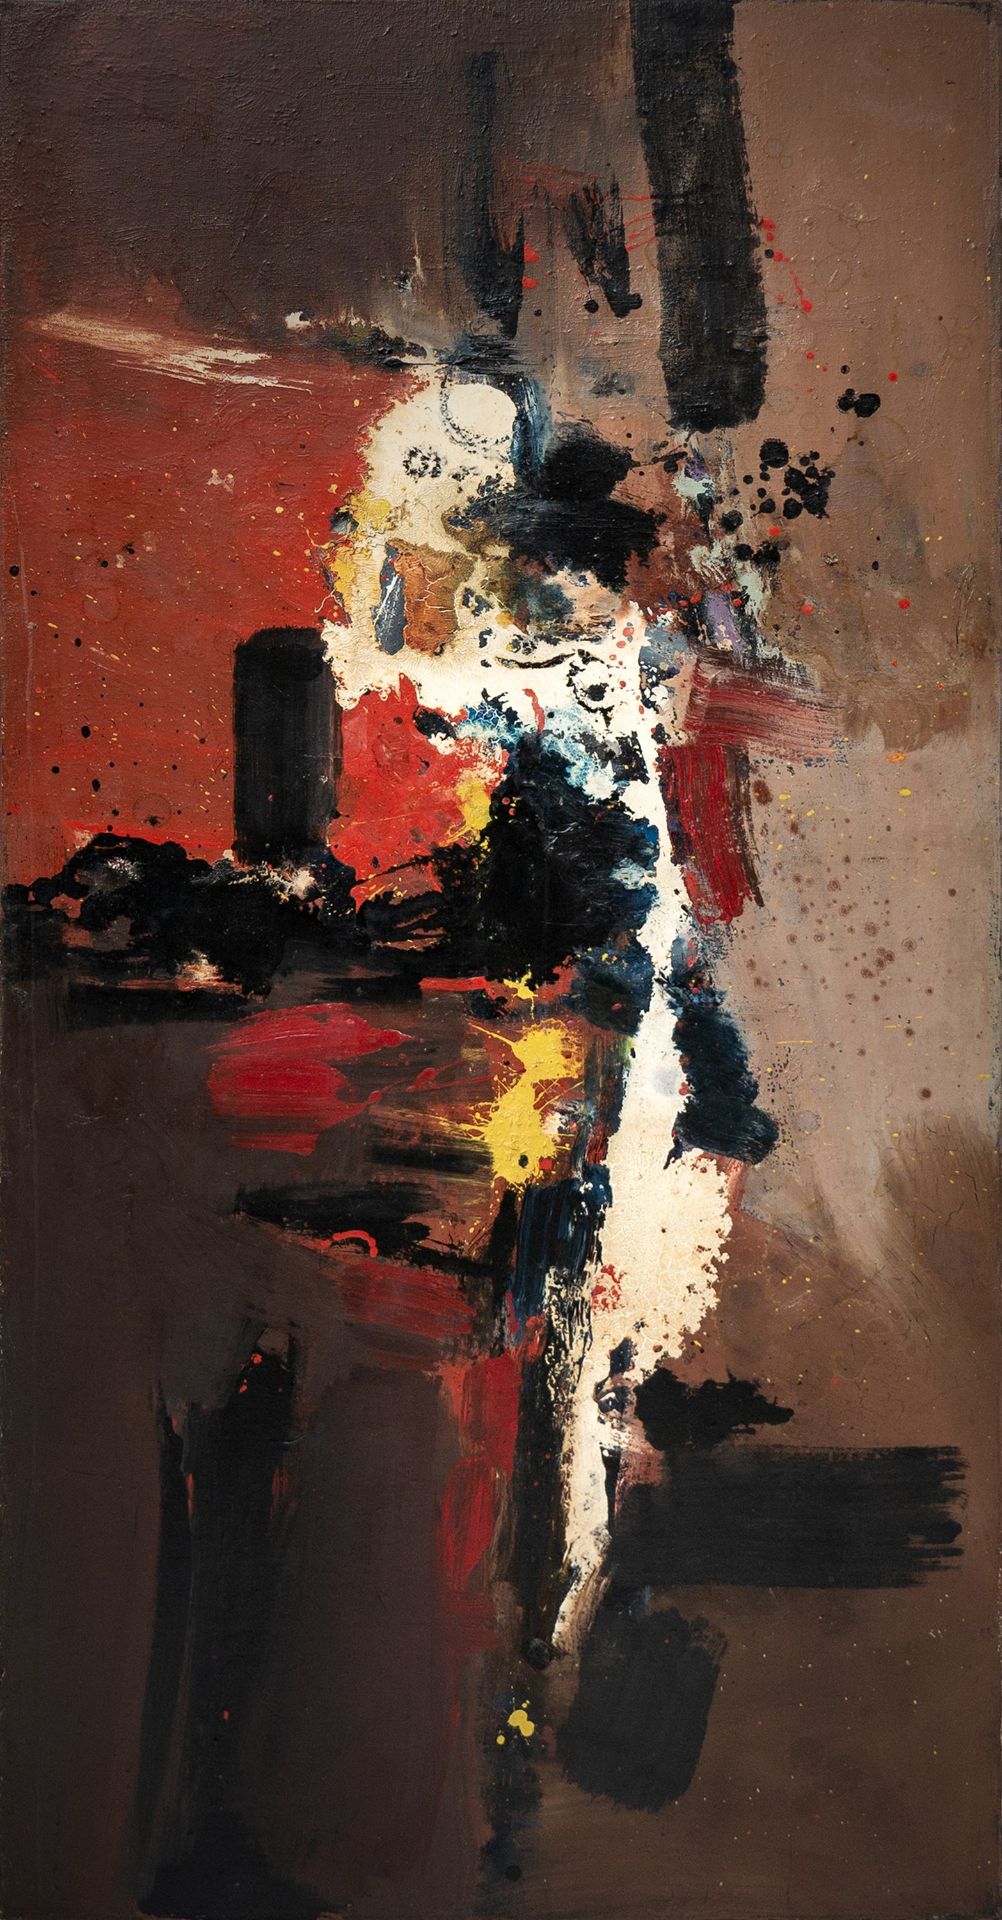 Denis Bowen (1921-2006) Atomic Image I, 1959 oil on canvas 182.9 x 91.4 cm. Provenance: Arthur Tooth